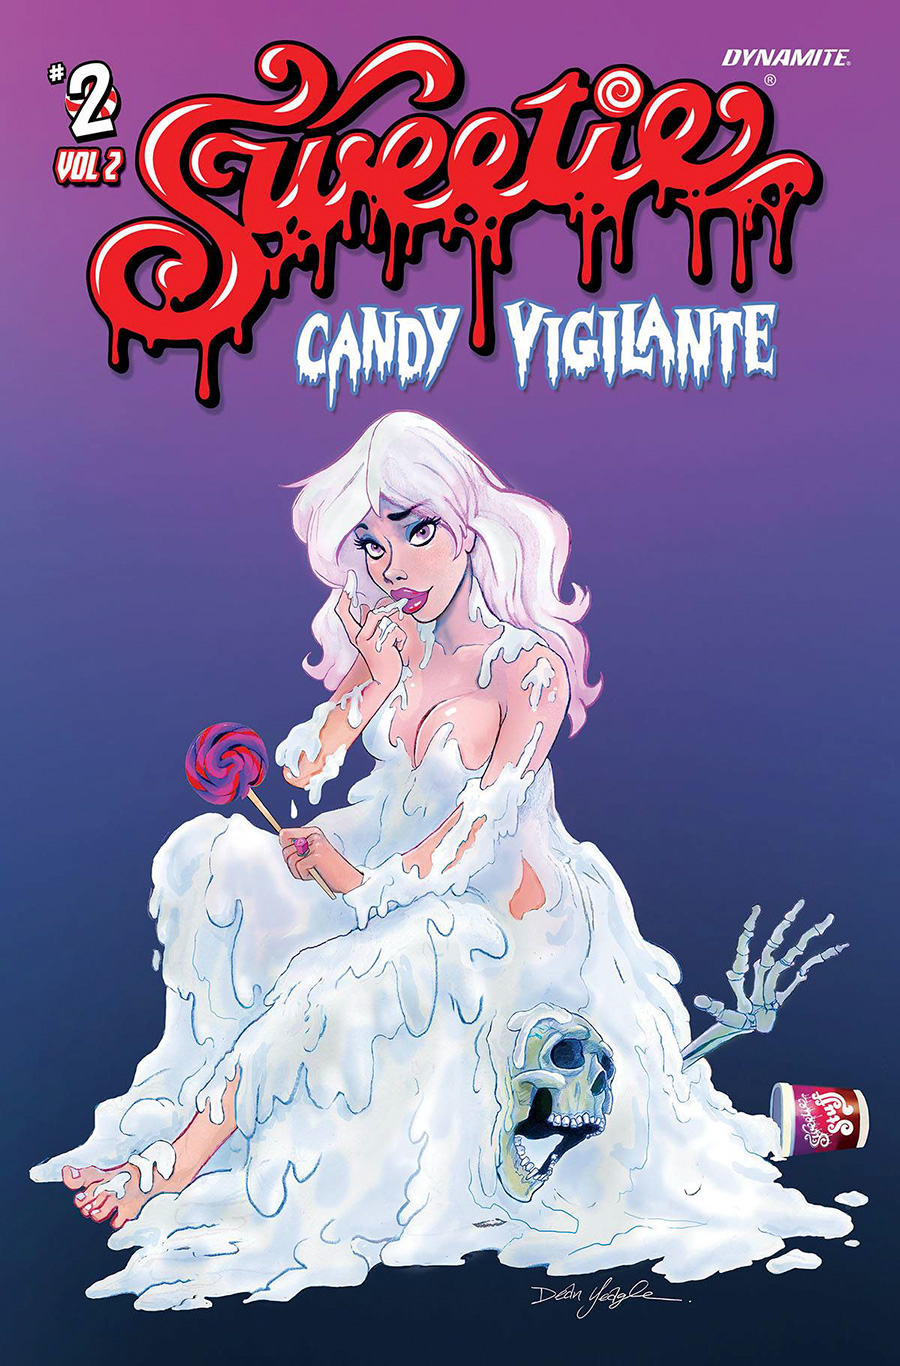 Sweetie Candy Vigilante Vol 2 #2 Cover A Regular Dean Yeagle Cover